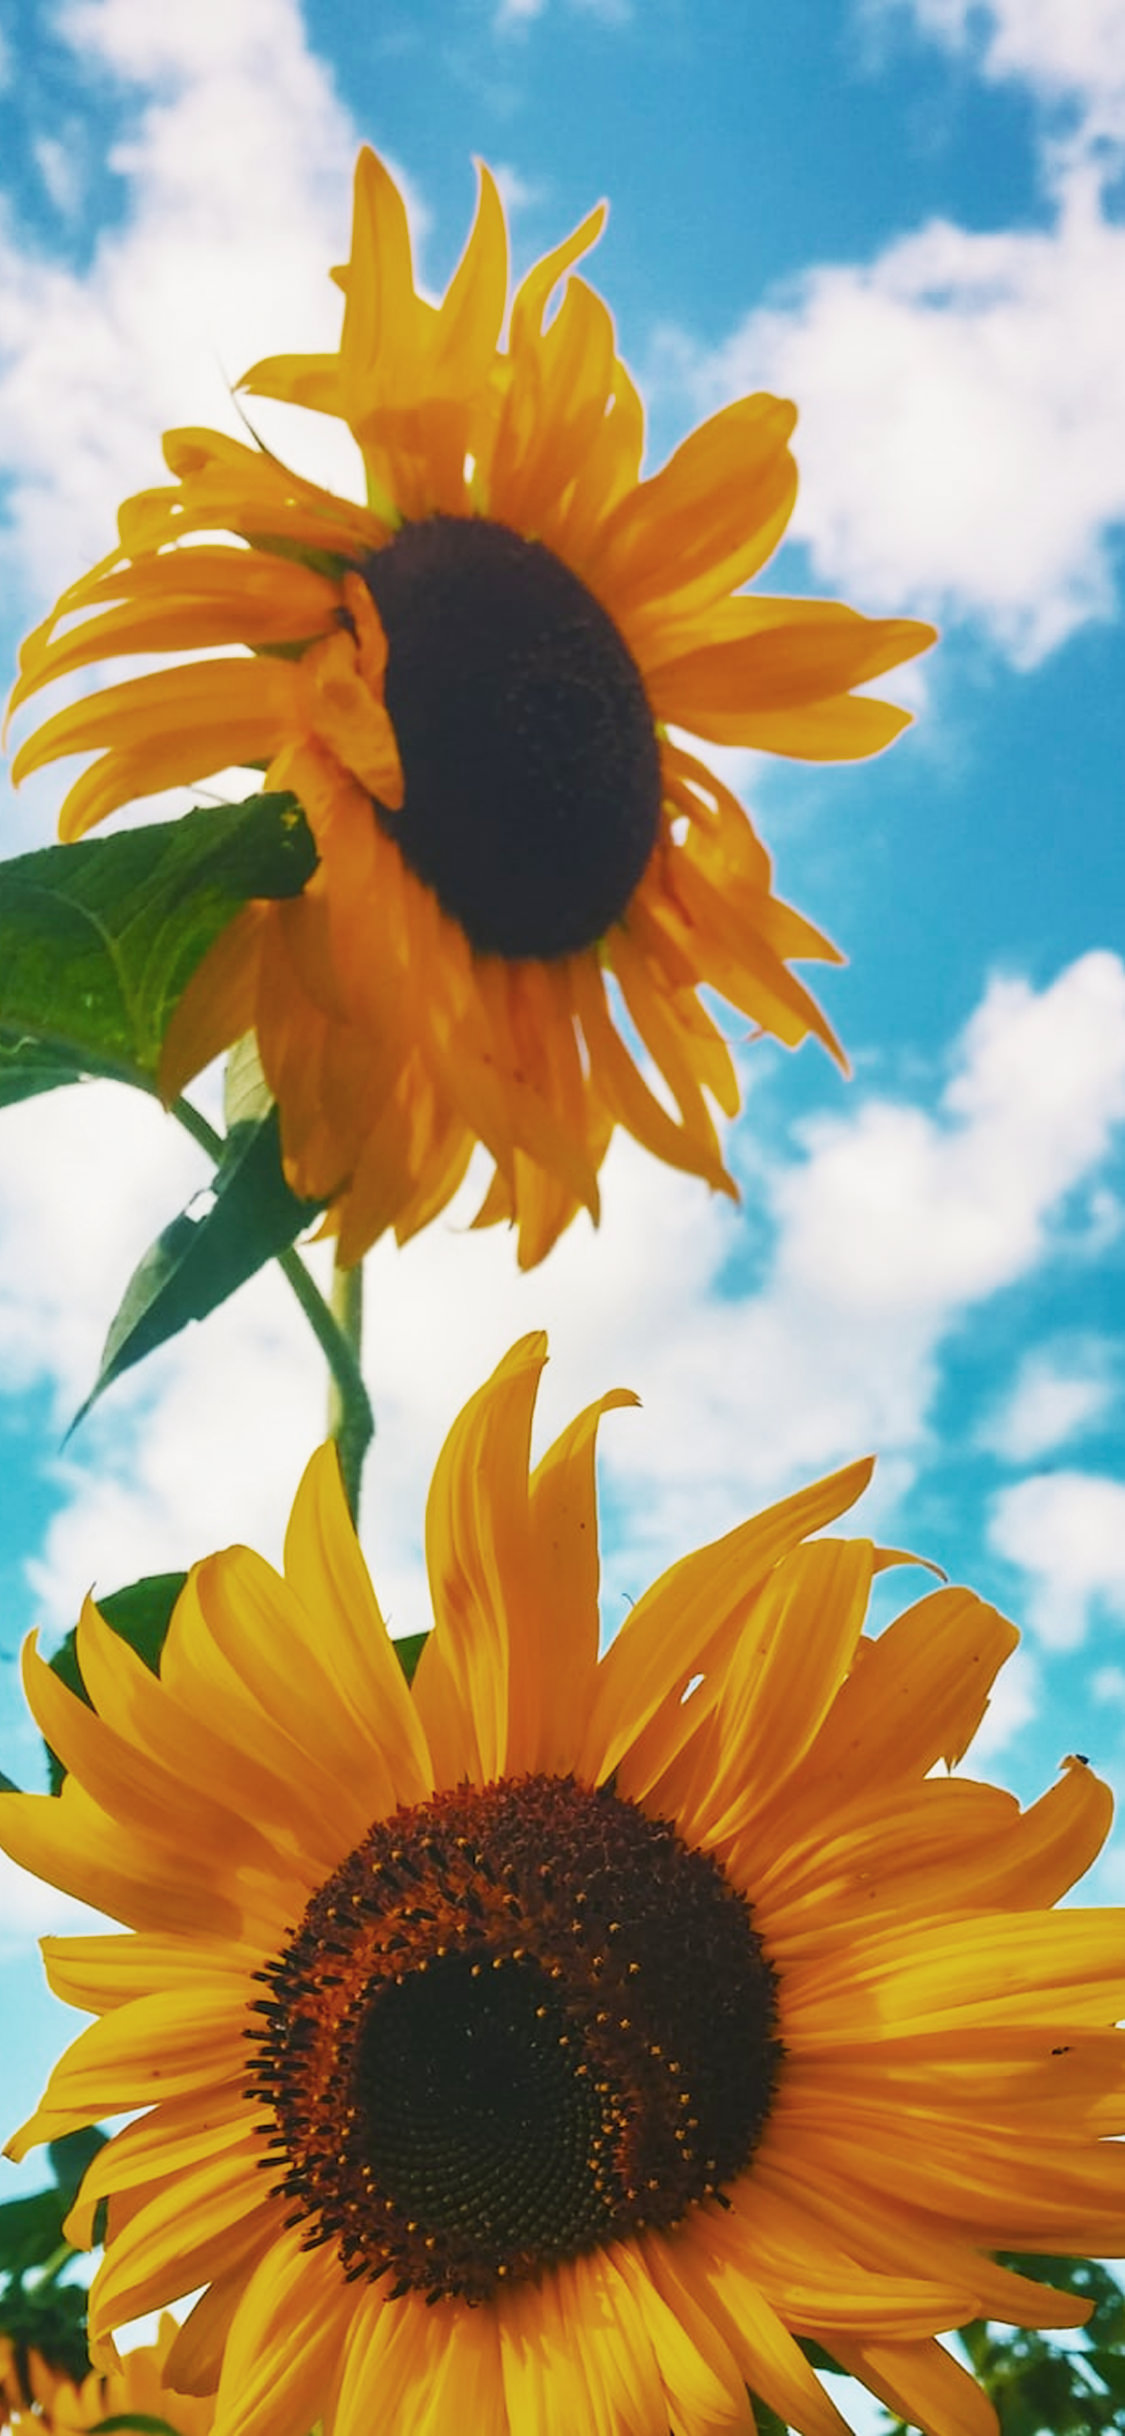 sunflower02 - ひまわりの無料高画質スマホ壁紙14枚 [iPhone＆Androidに対応]